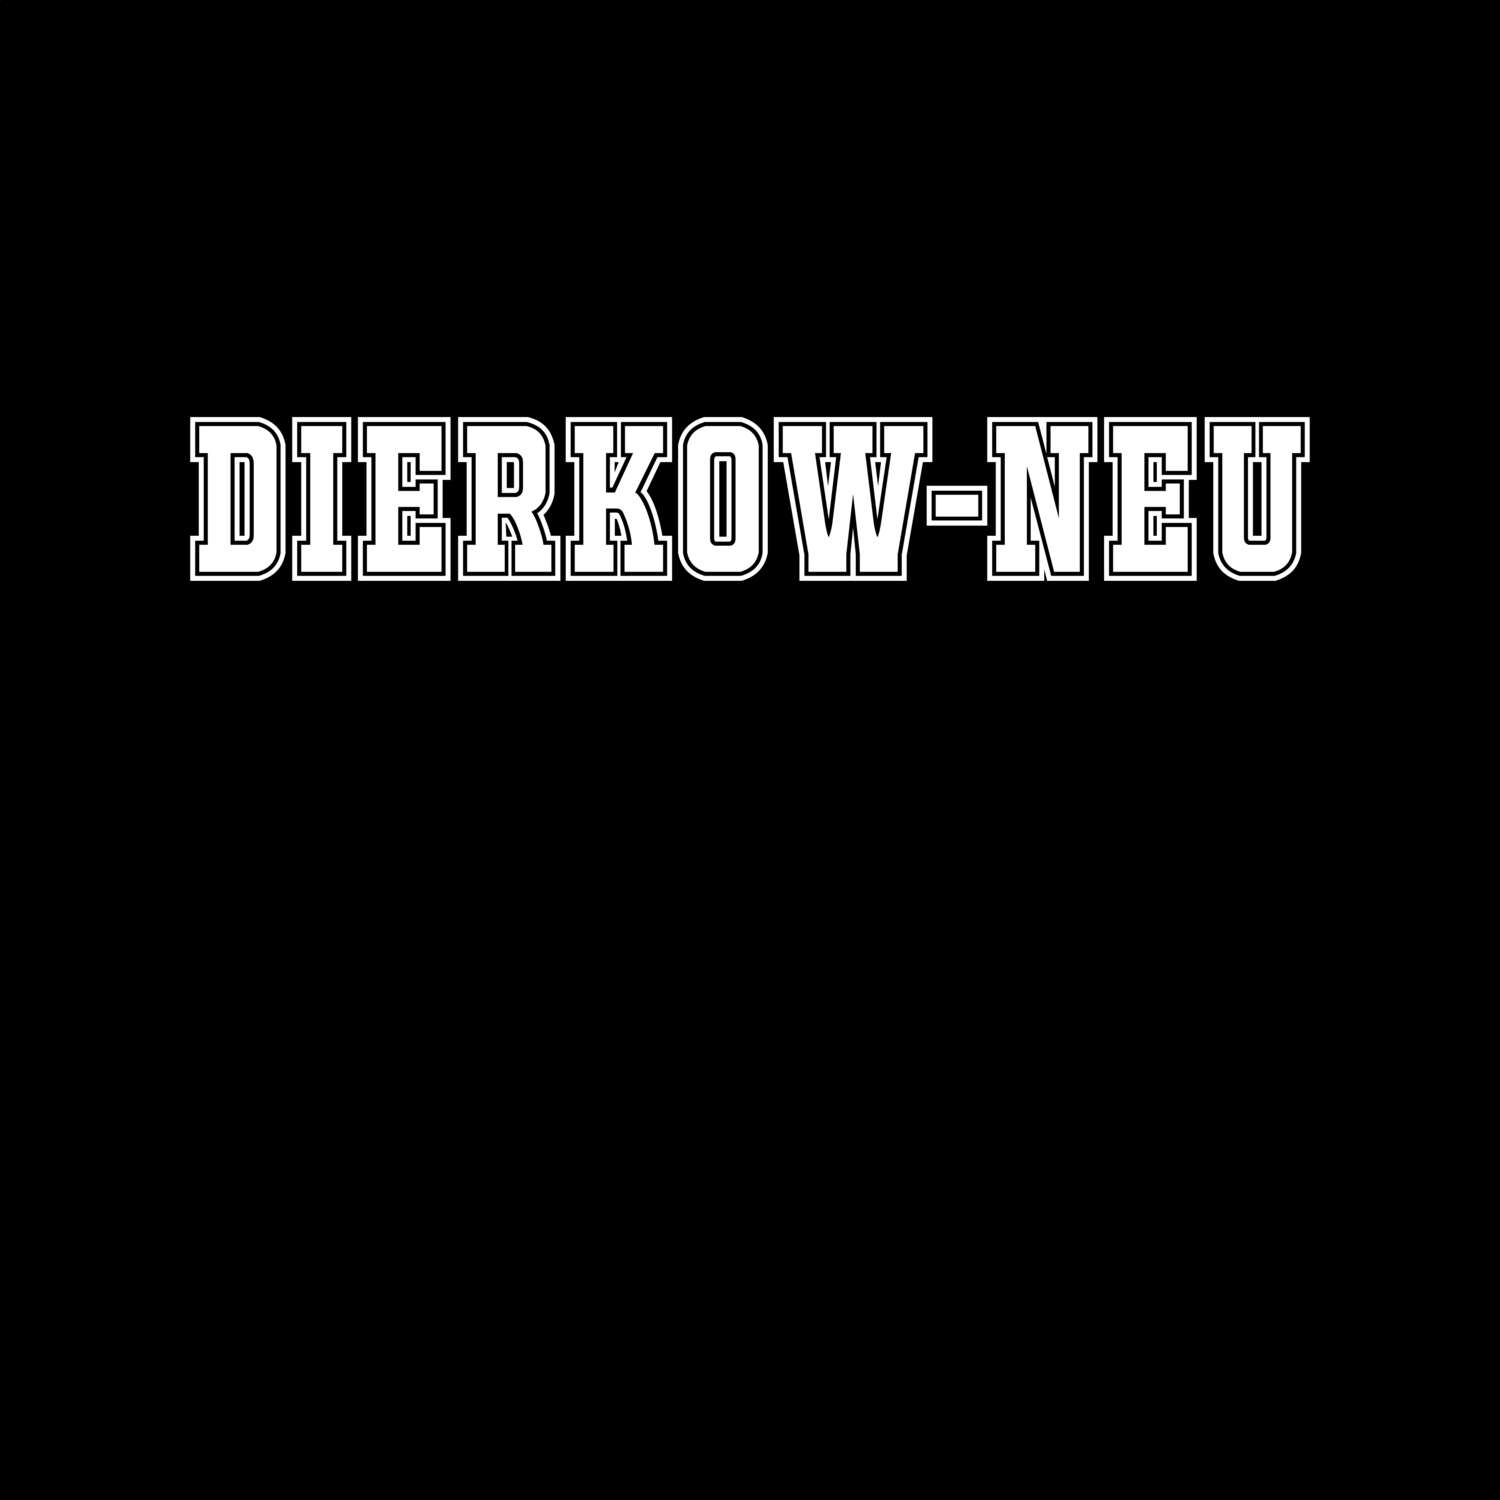 Dierkow-Neu T-Shirt »Classic«